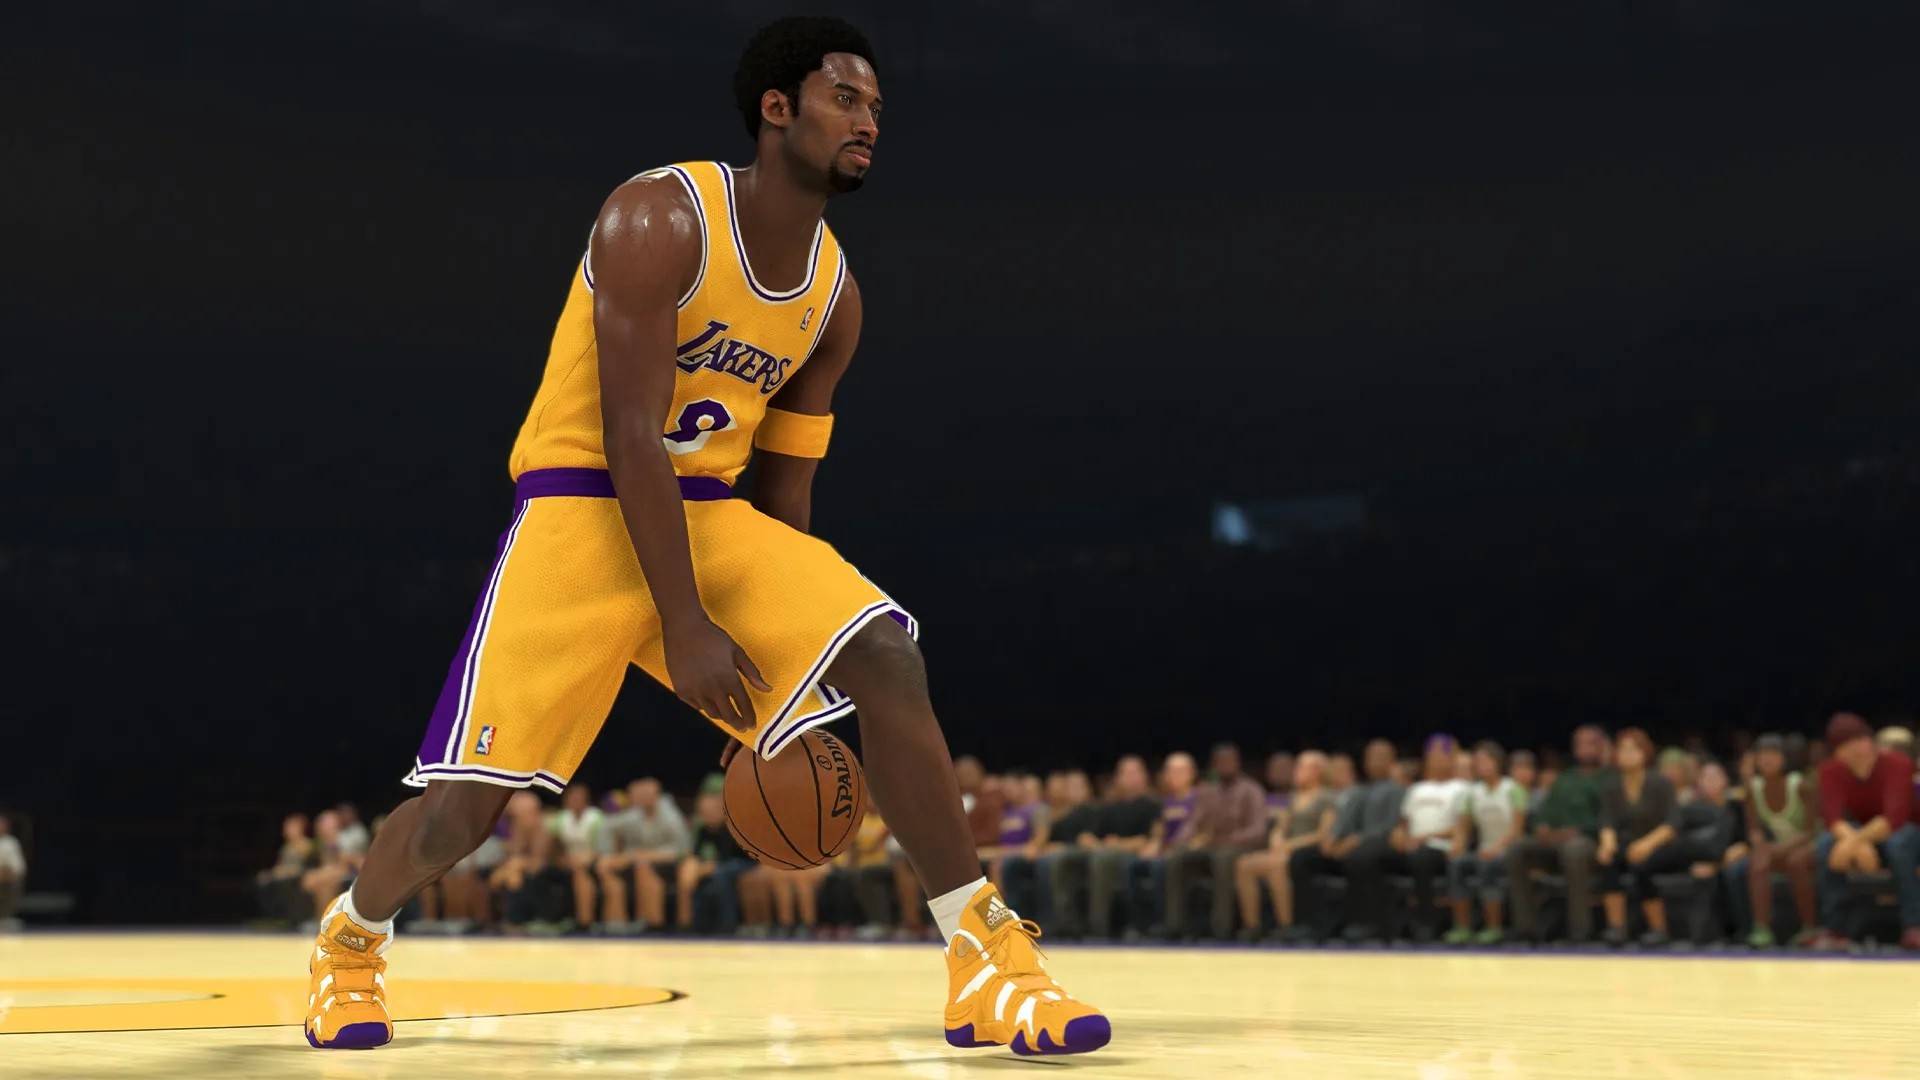 《NBA2K21》玩法和改动分享!8月24日上线试玩版